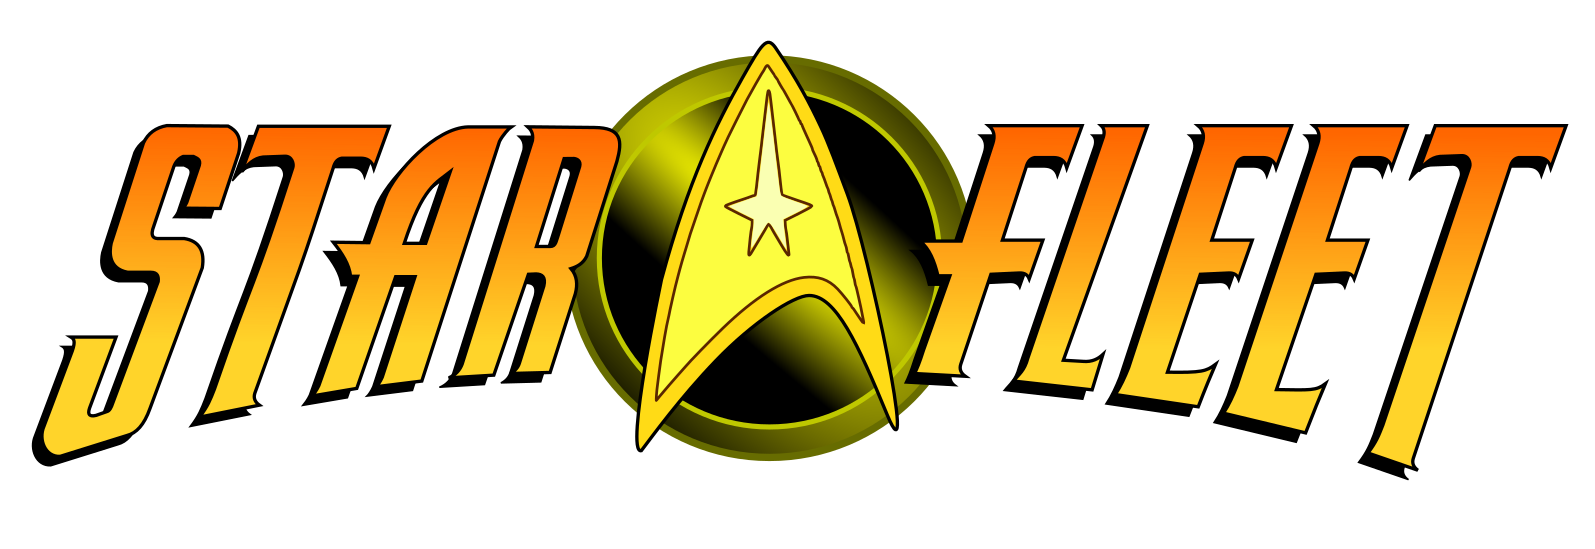 Starfleet Mission header